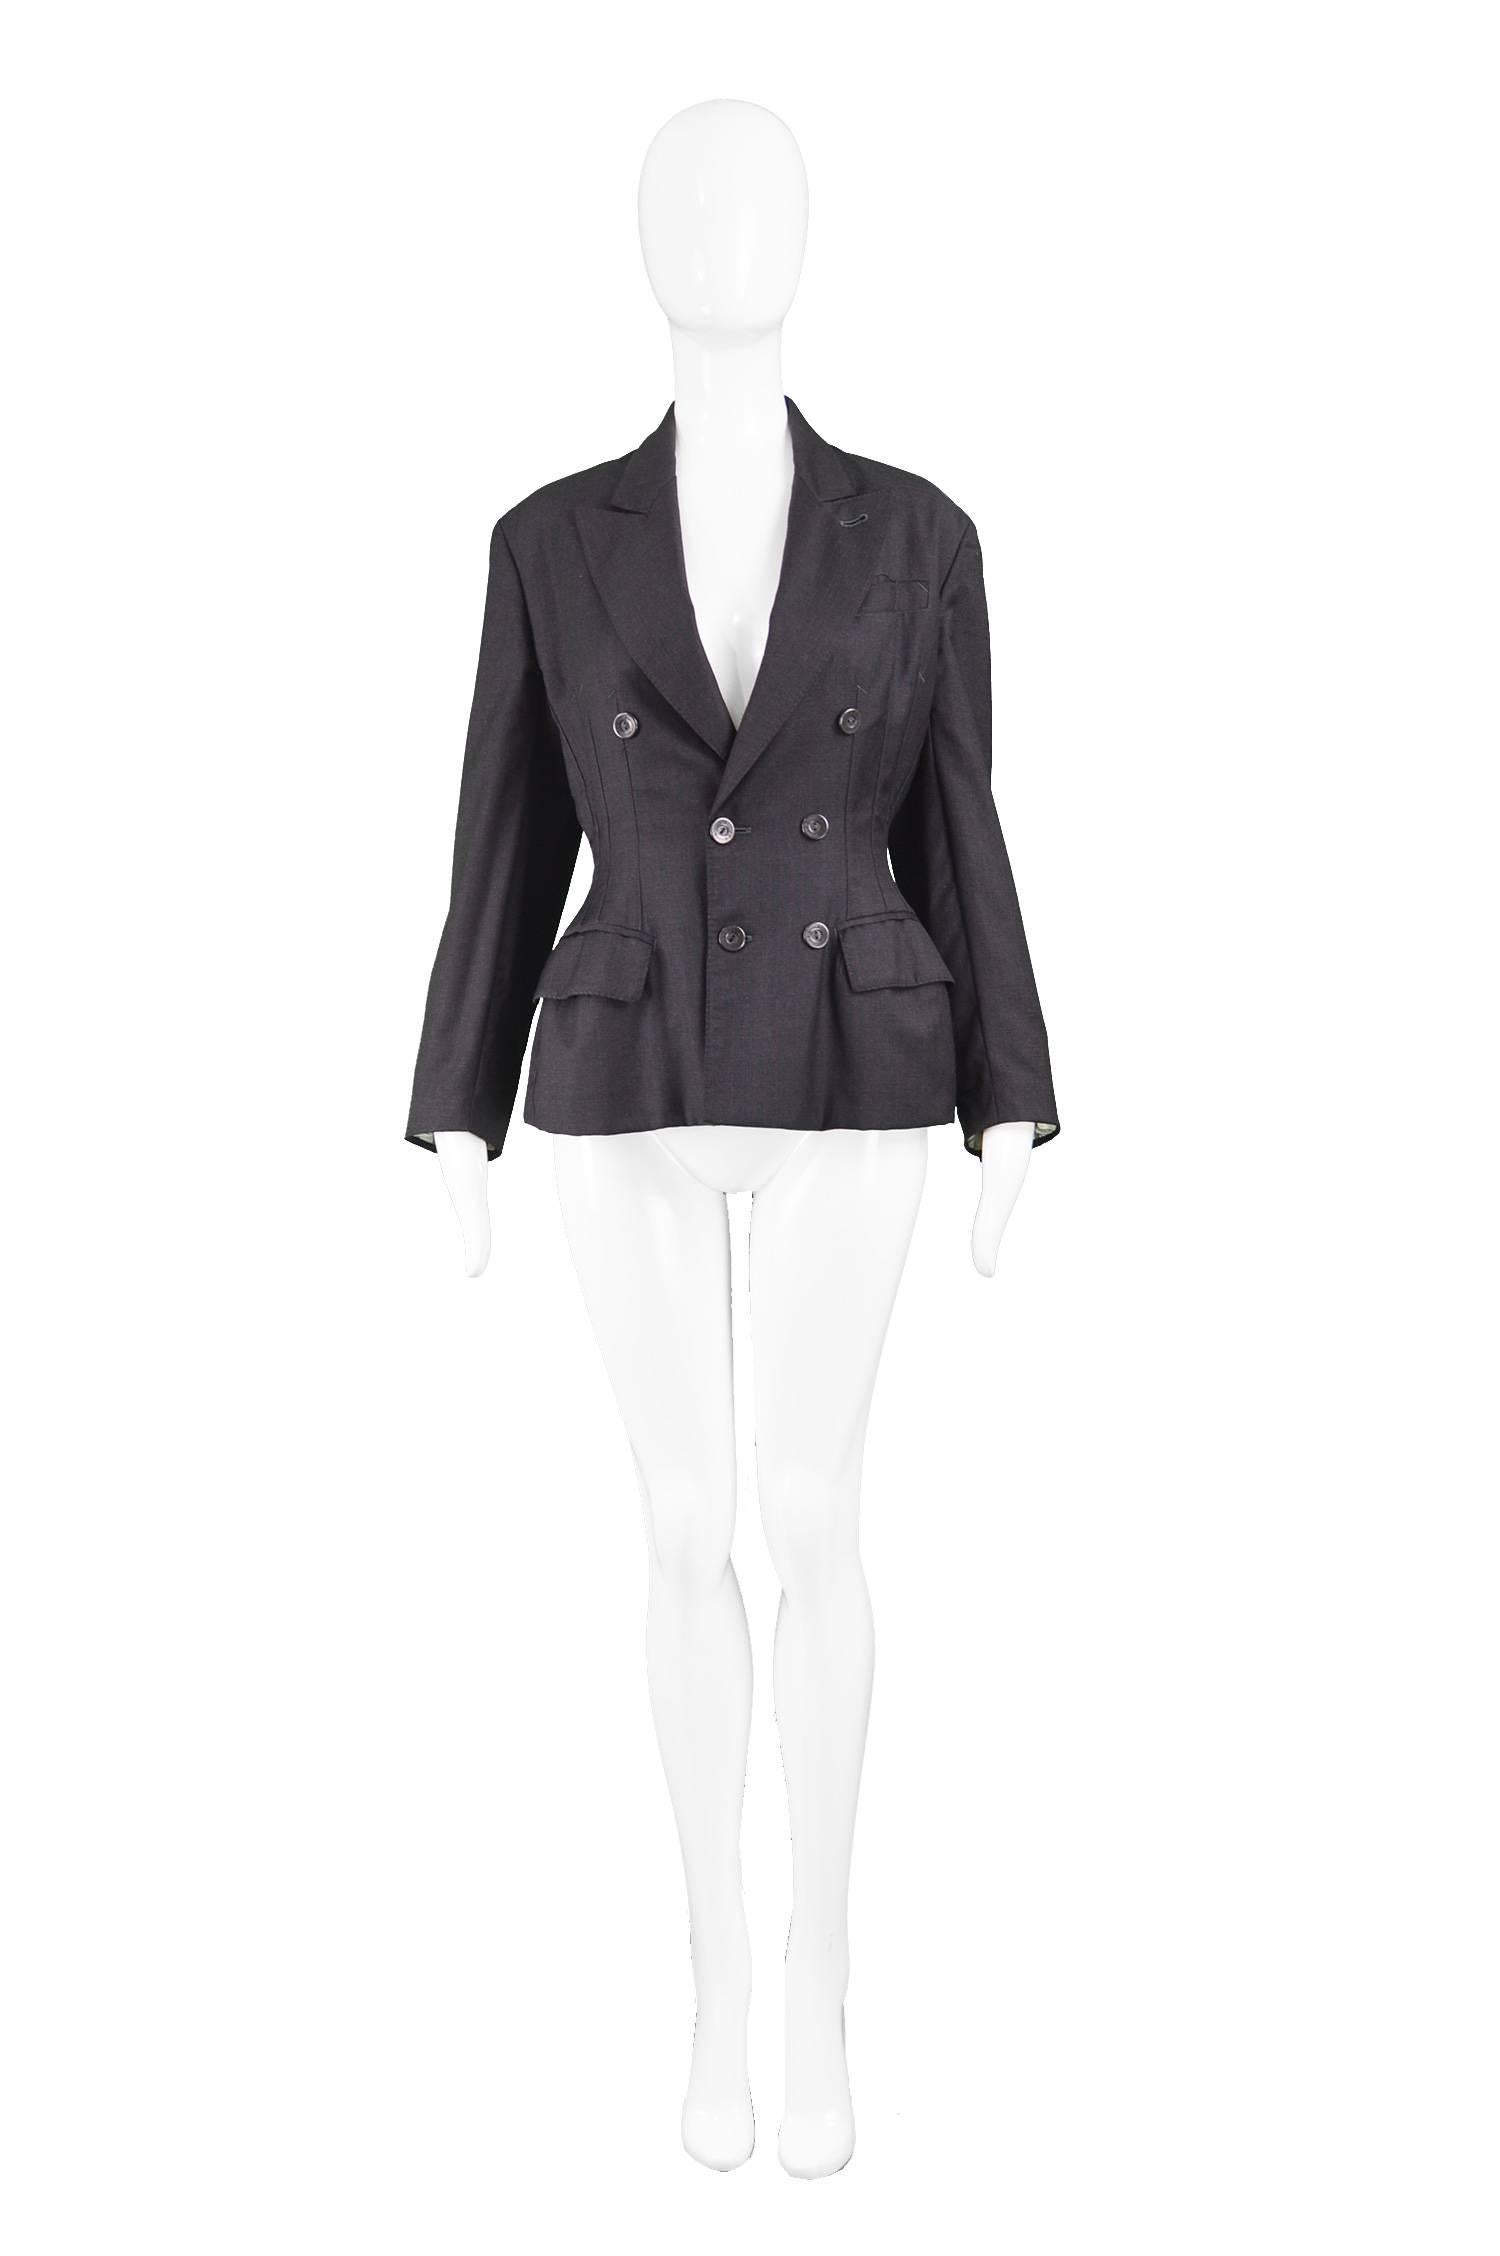 Jean Paul Gaultier Vintage Grey Women's Corset Inspired Pinstripe Blazer, 1990s

Estimated Size: UK 12/ US 8/ EU 40. Please check measurements. 
Bust - 36” / 91cm
Waist - 30” / 76cm
Hem - 42” / 106cm
Length (Shoulder to Hem) - 23” / 58cm
Shoulder to